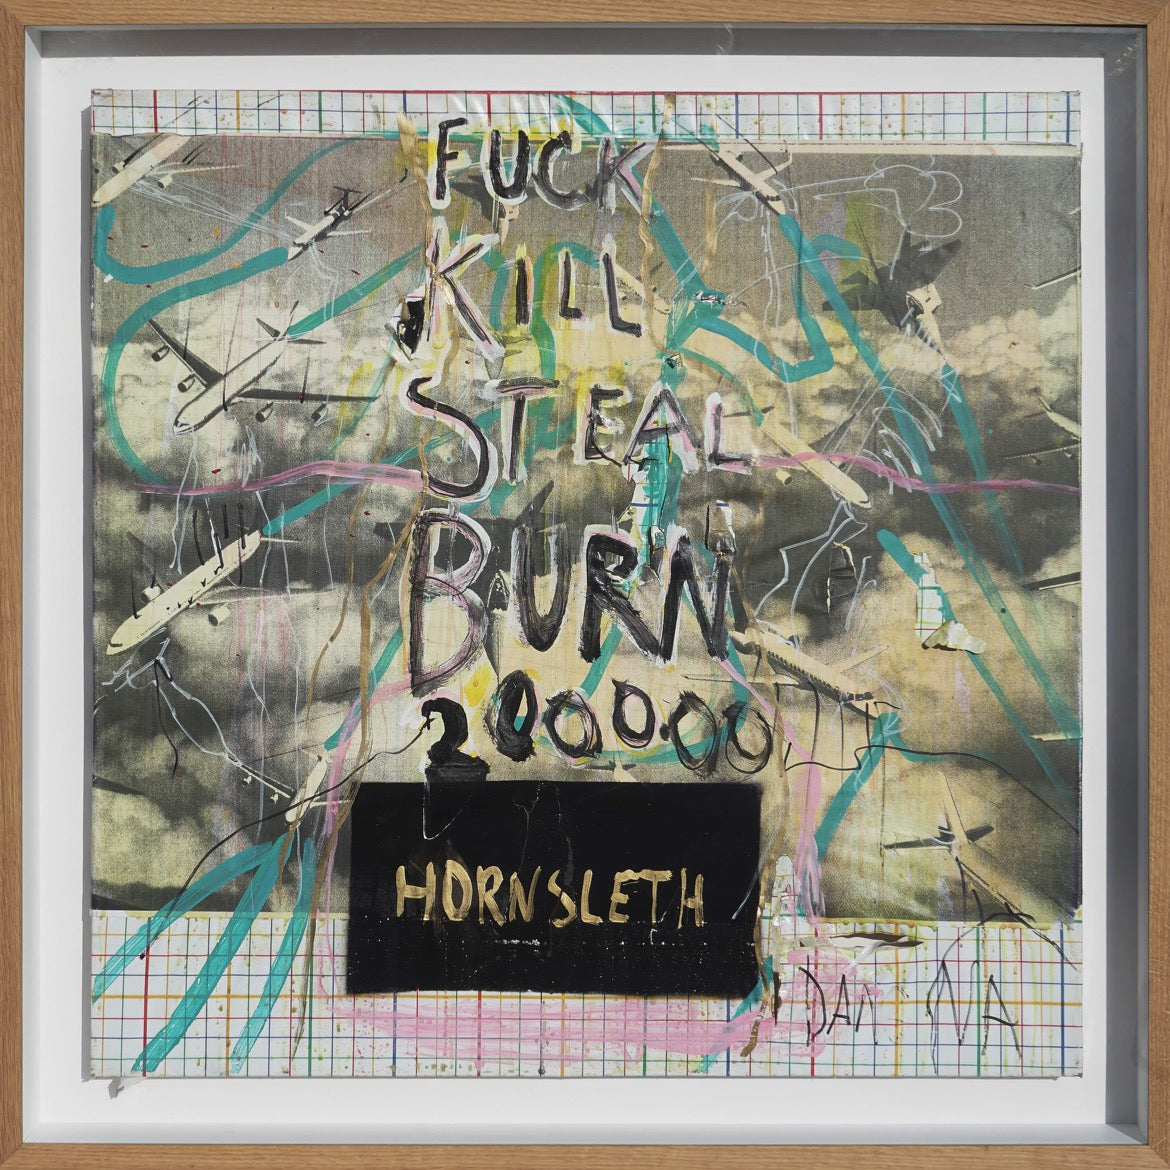 Fuck Kill Steal Burn - 80 x 80 cm (årgang 2000)